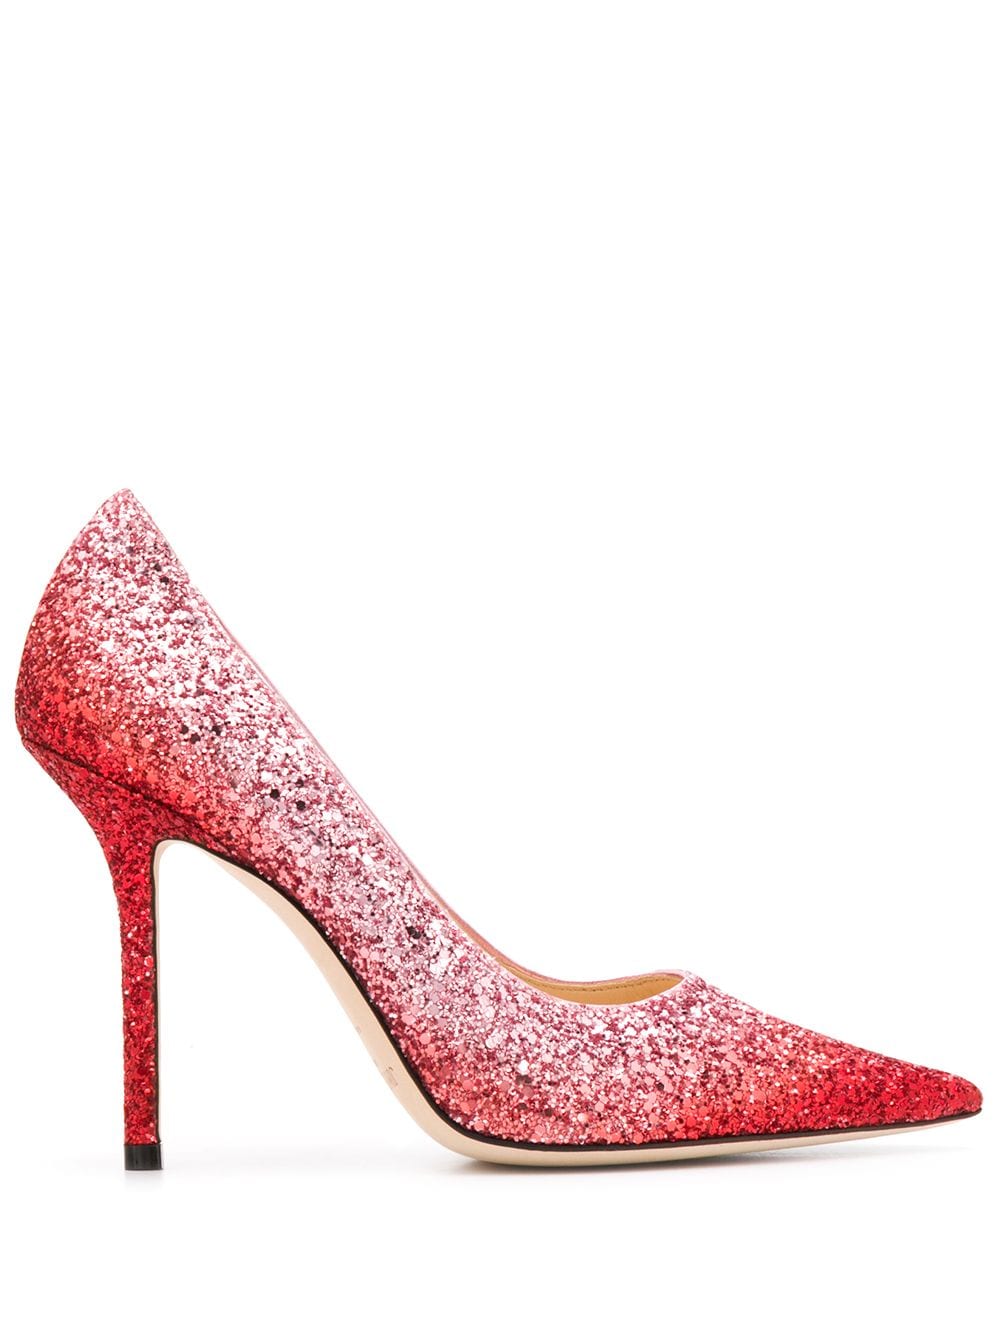 jimmy choo red glitter heels